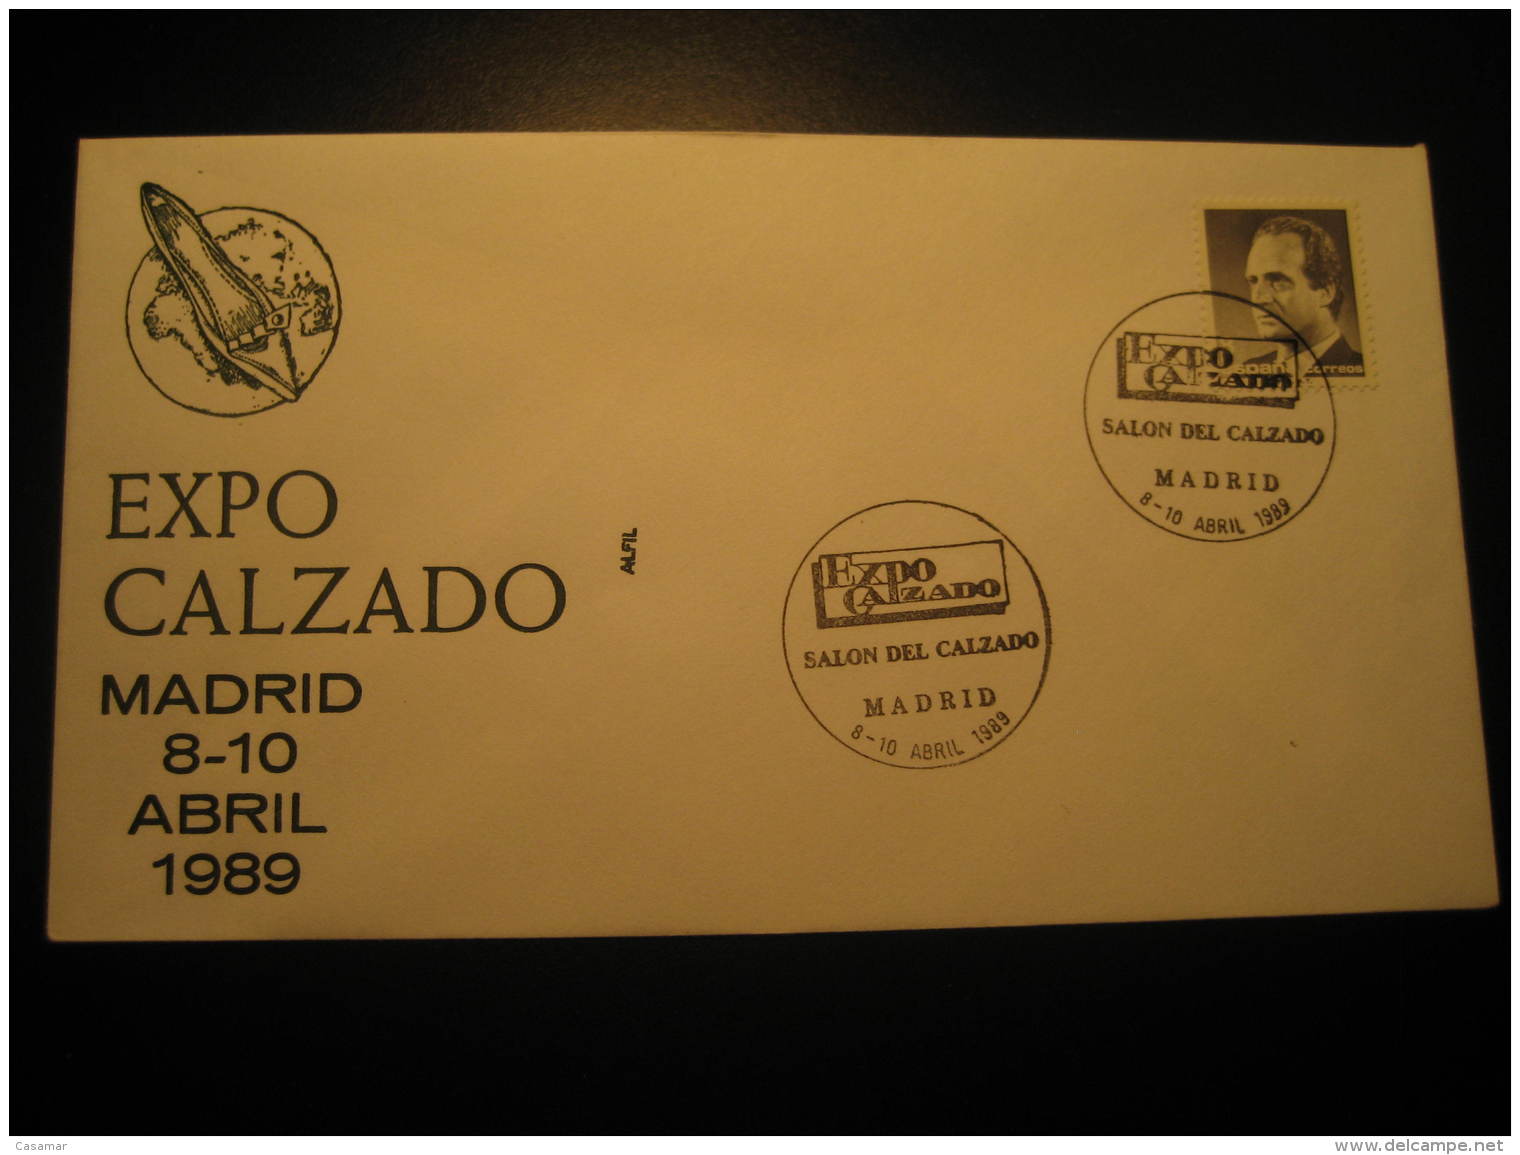 EXPO CALZADO Shoes Footwear Shod Textile Fashion MADRID 1989 Cancel Cover SPAIN - Textil